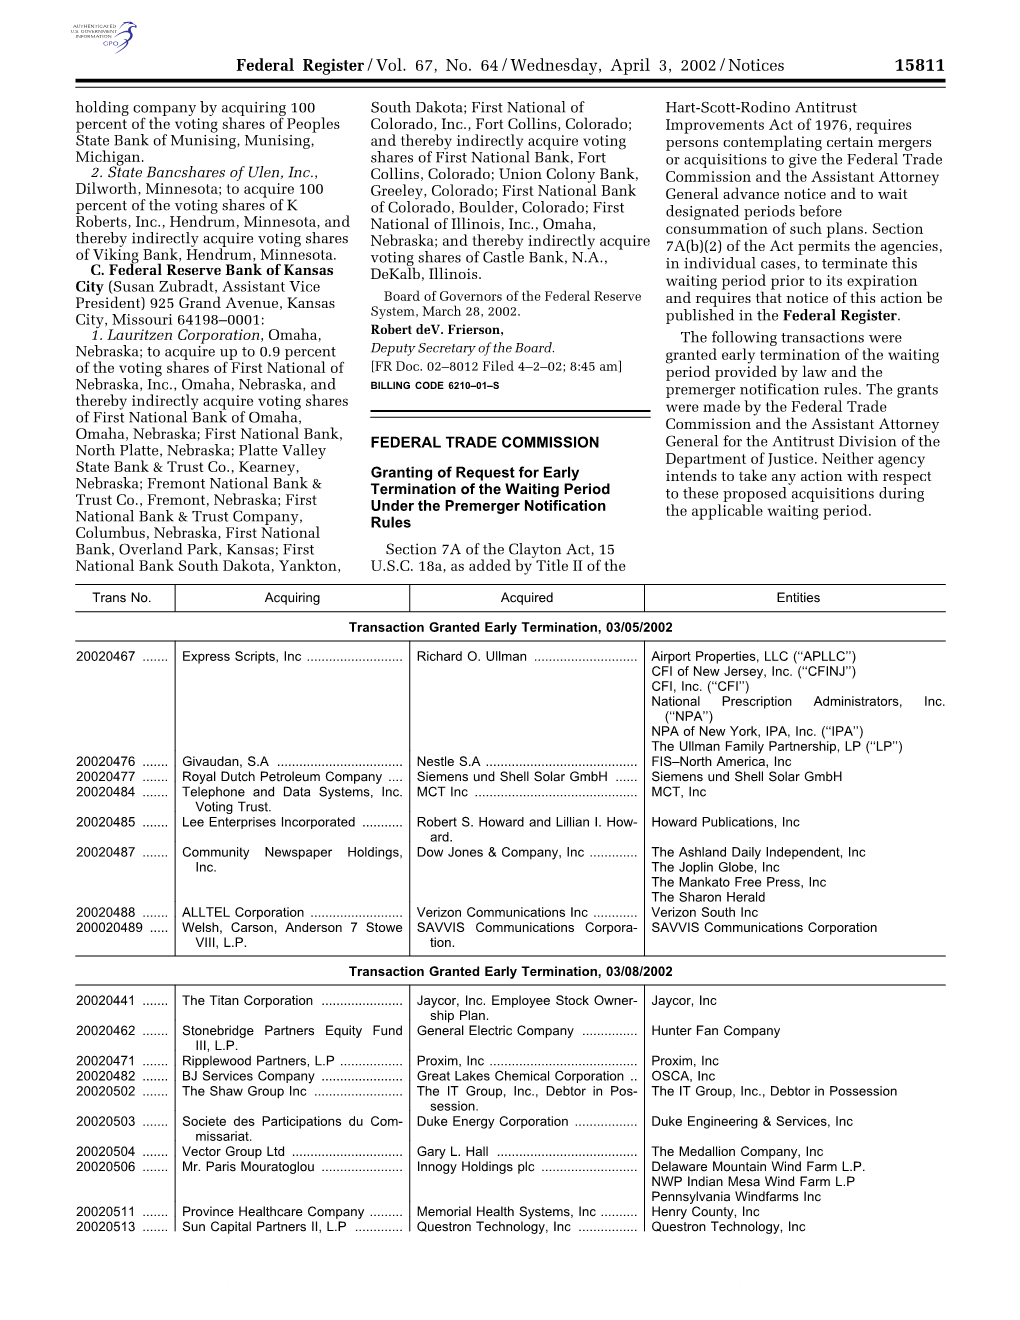 Federal Register/Vol. 67, No. 64/Wednesday, April 3, 2002/Notices